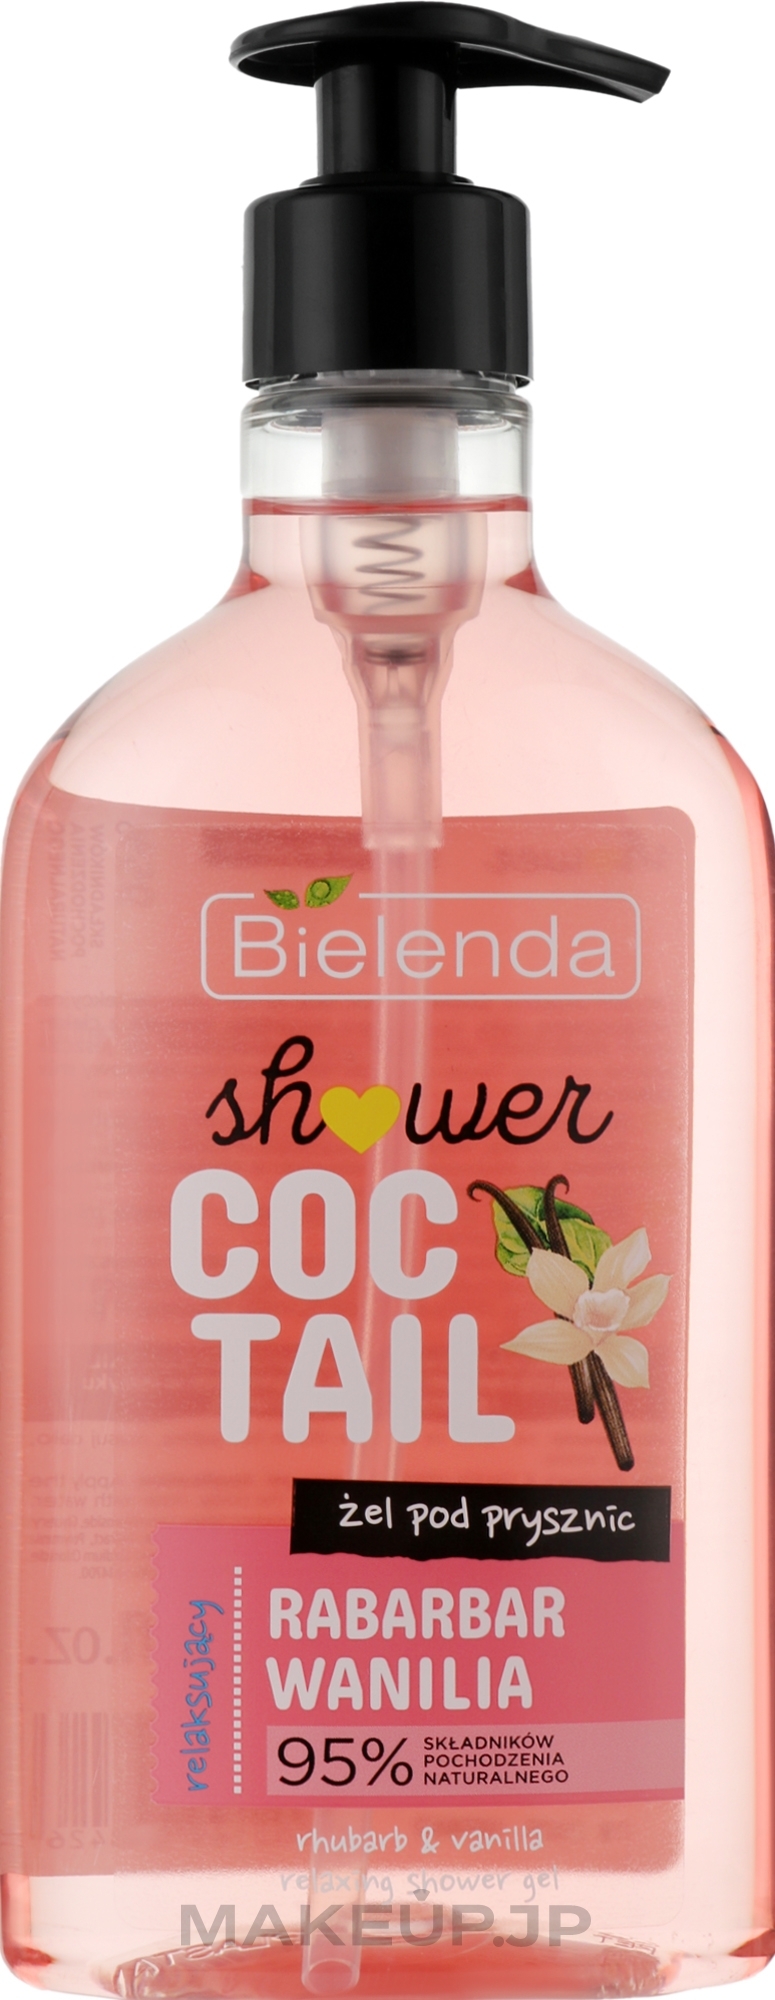 Shower Gel "Rhubarb & Vanilla" - Bielenda Coctail Shower Rabarbar Wanilia — photo 400 ml